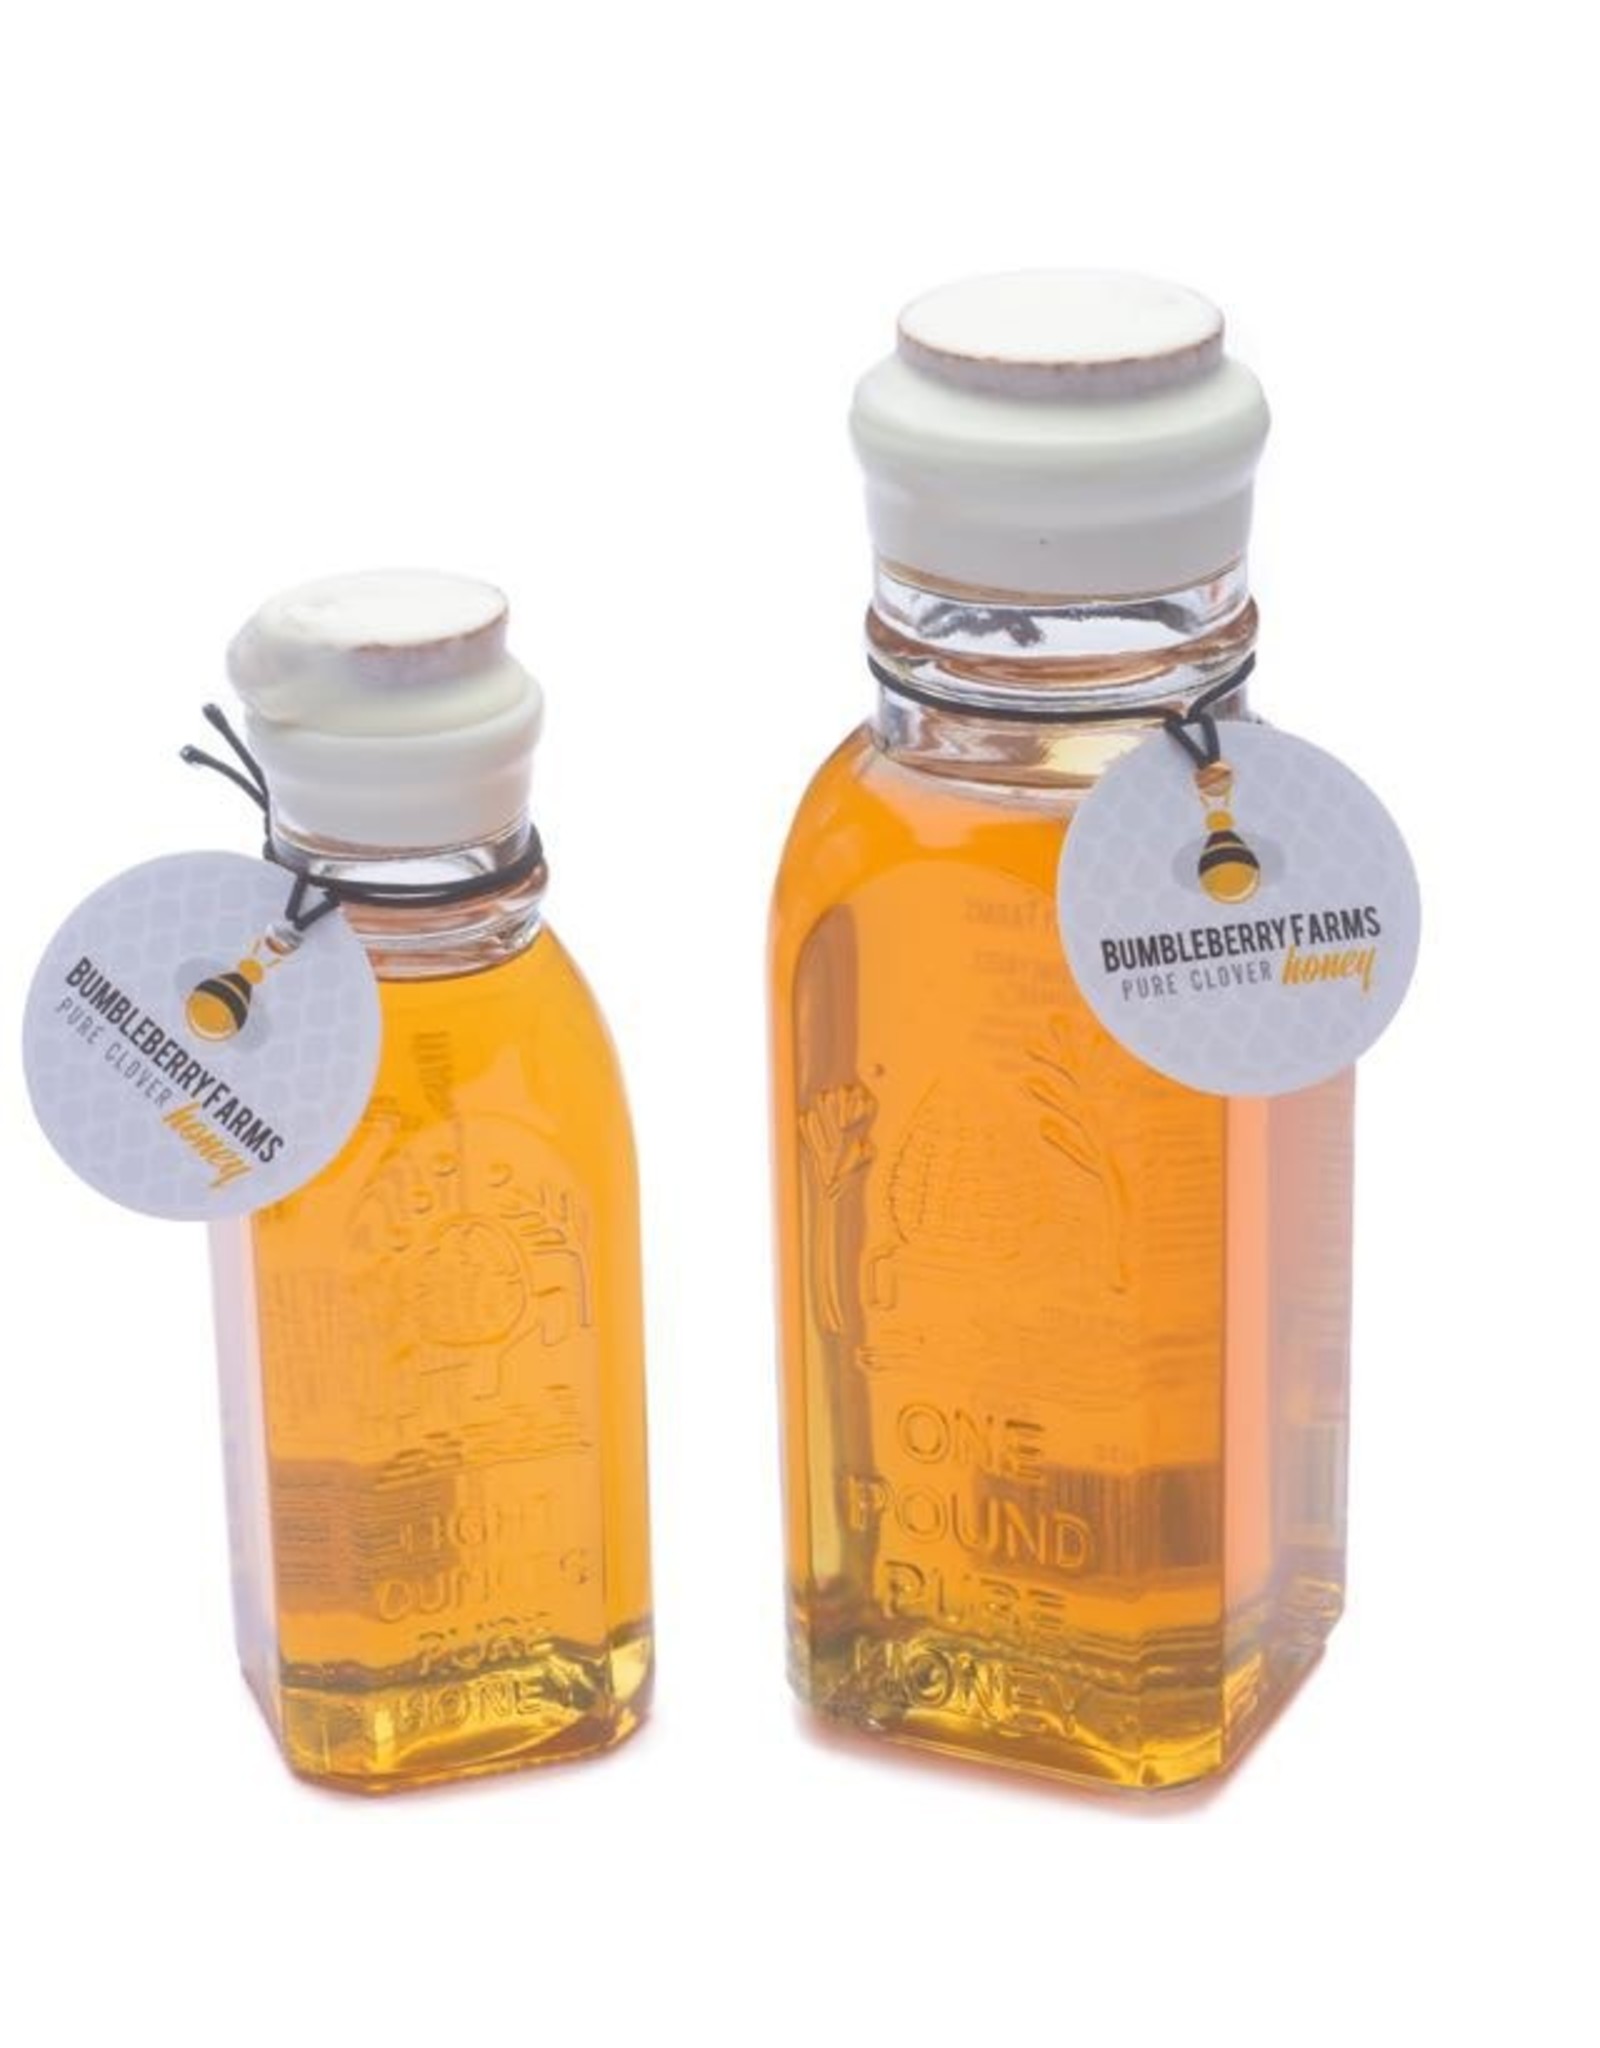 16oz Pure Clover Honey in Wax-dipped Embossed Honey Jar